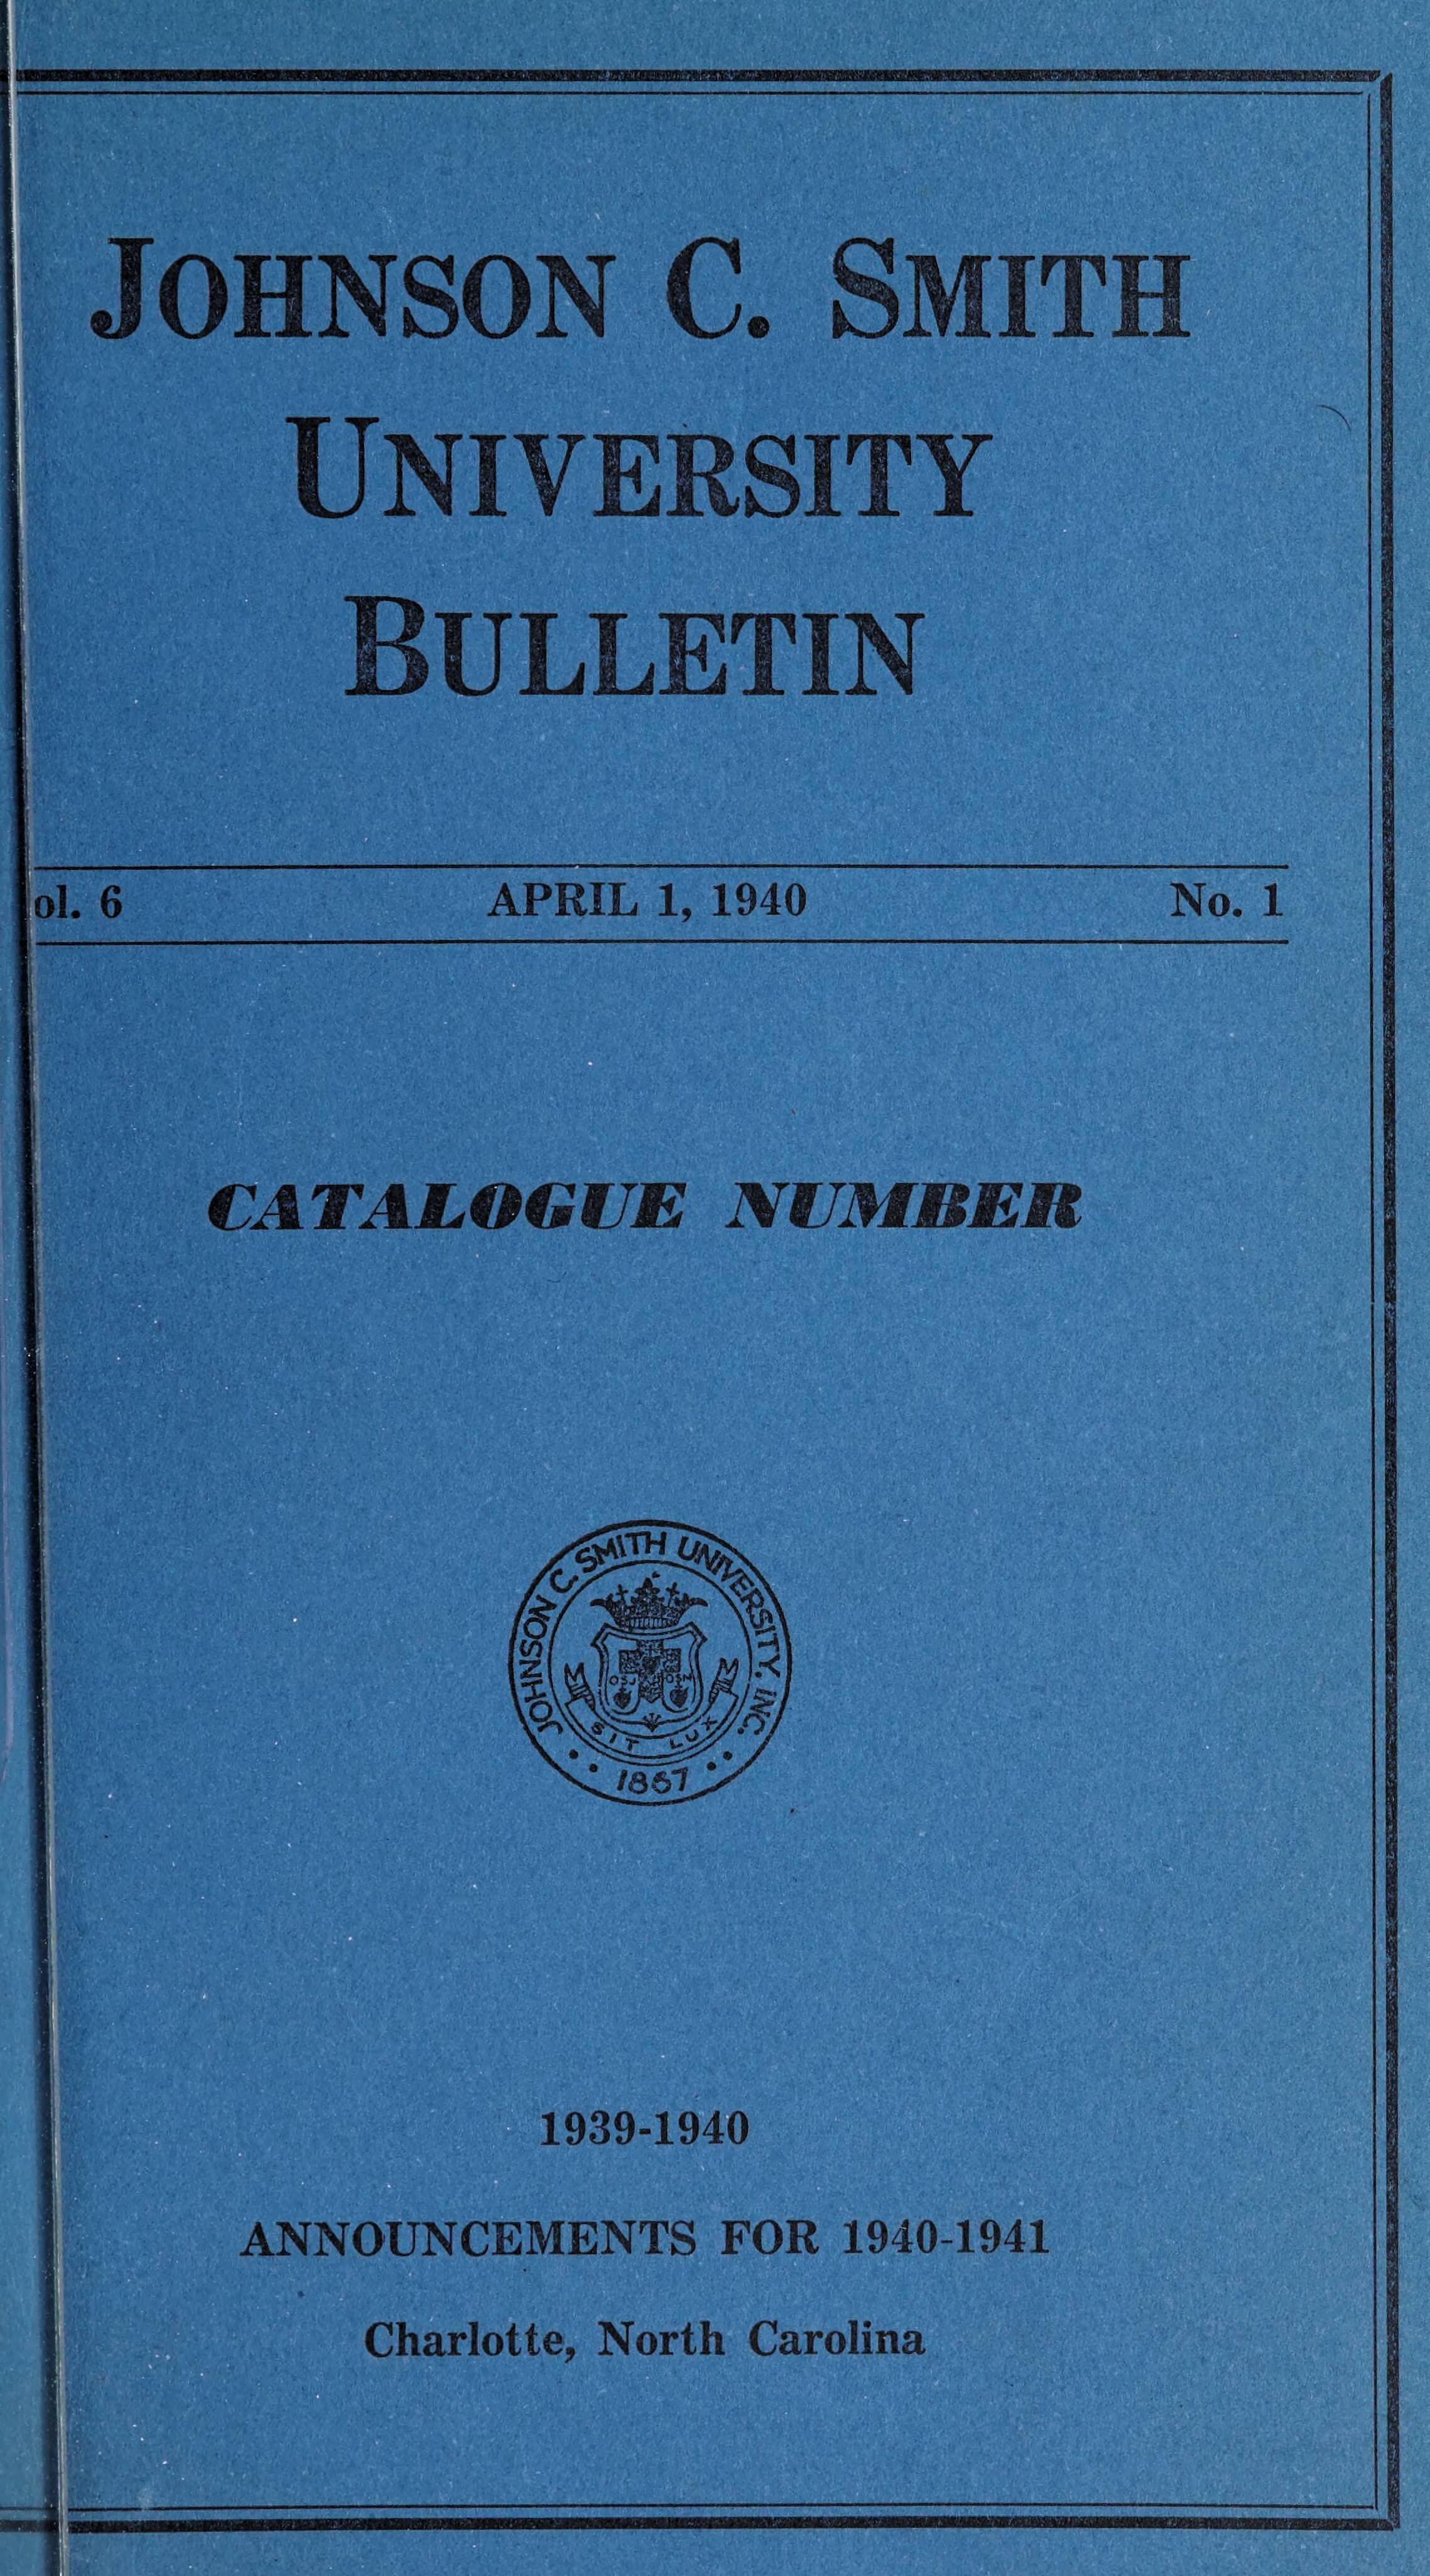 Johnson C. Smith University Bulletin [1940]